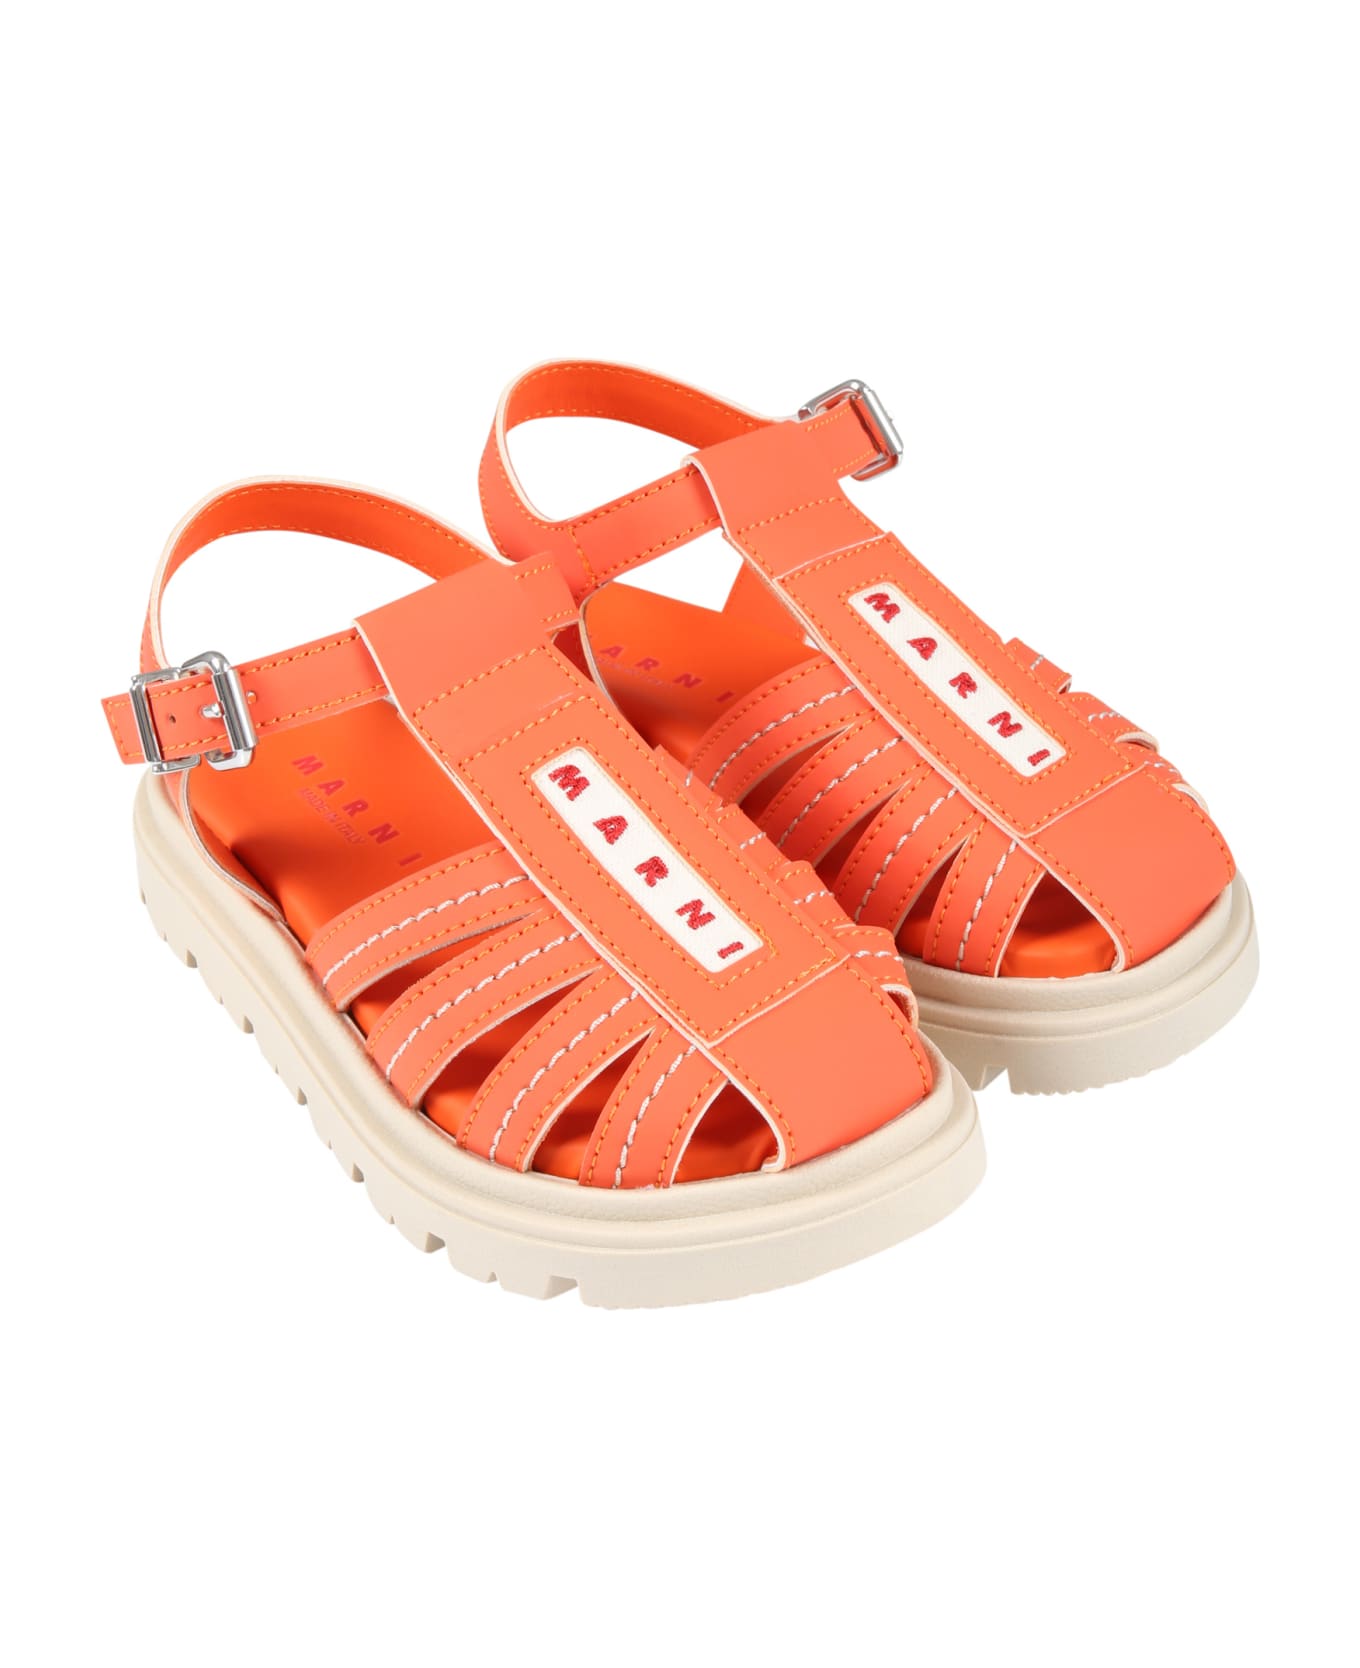 Marni Orange Sandals For Girl With Red Logo - Orange シューズ